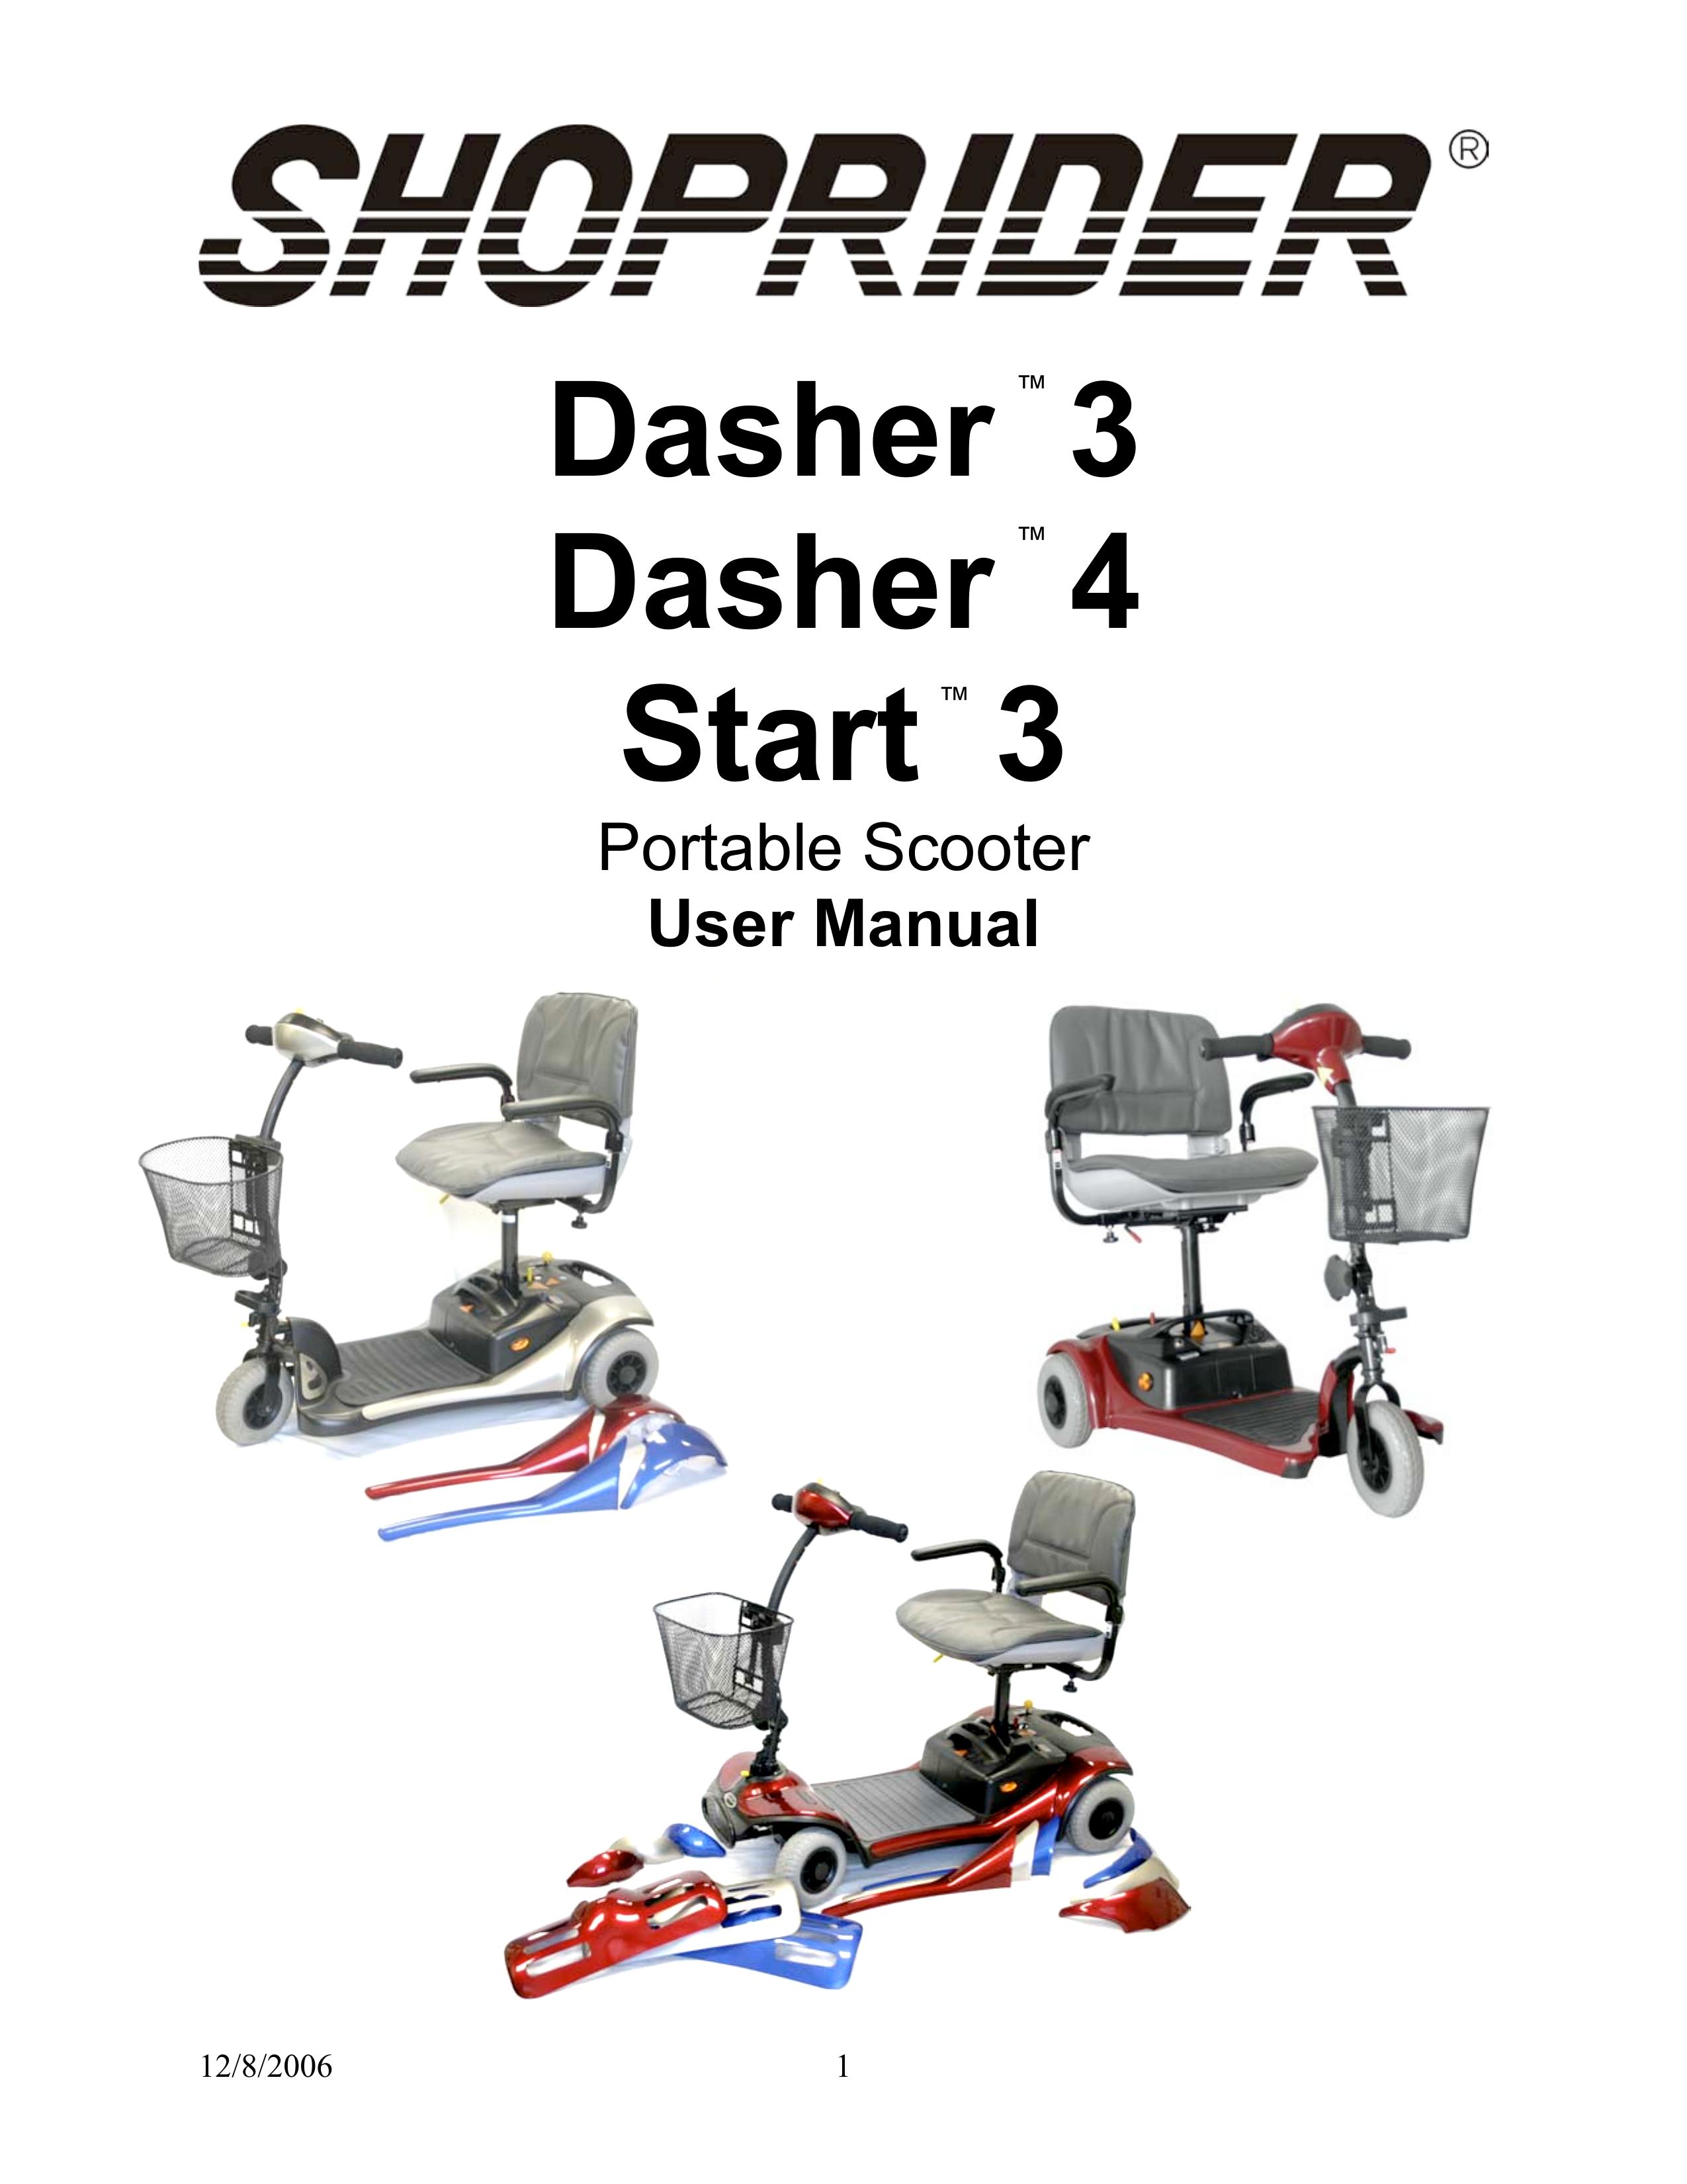 Shoprider Dasher 3 Mobility Aid User Manual